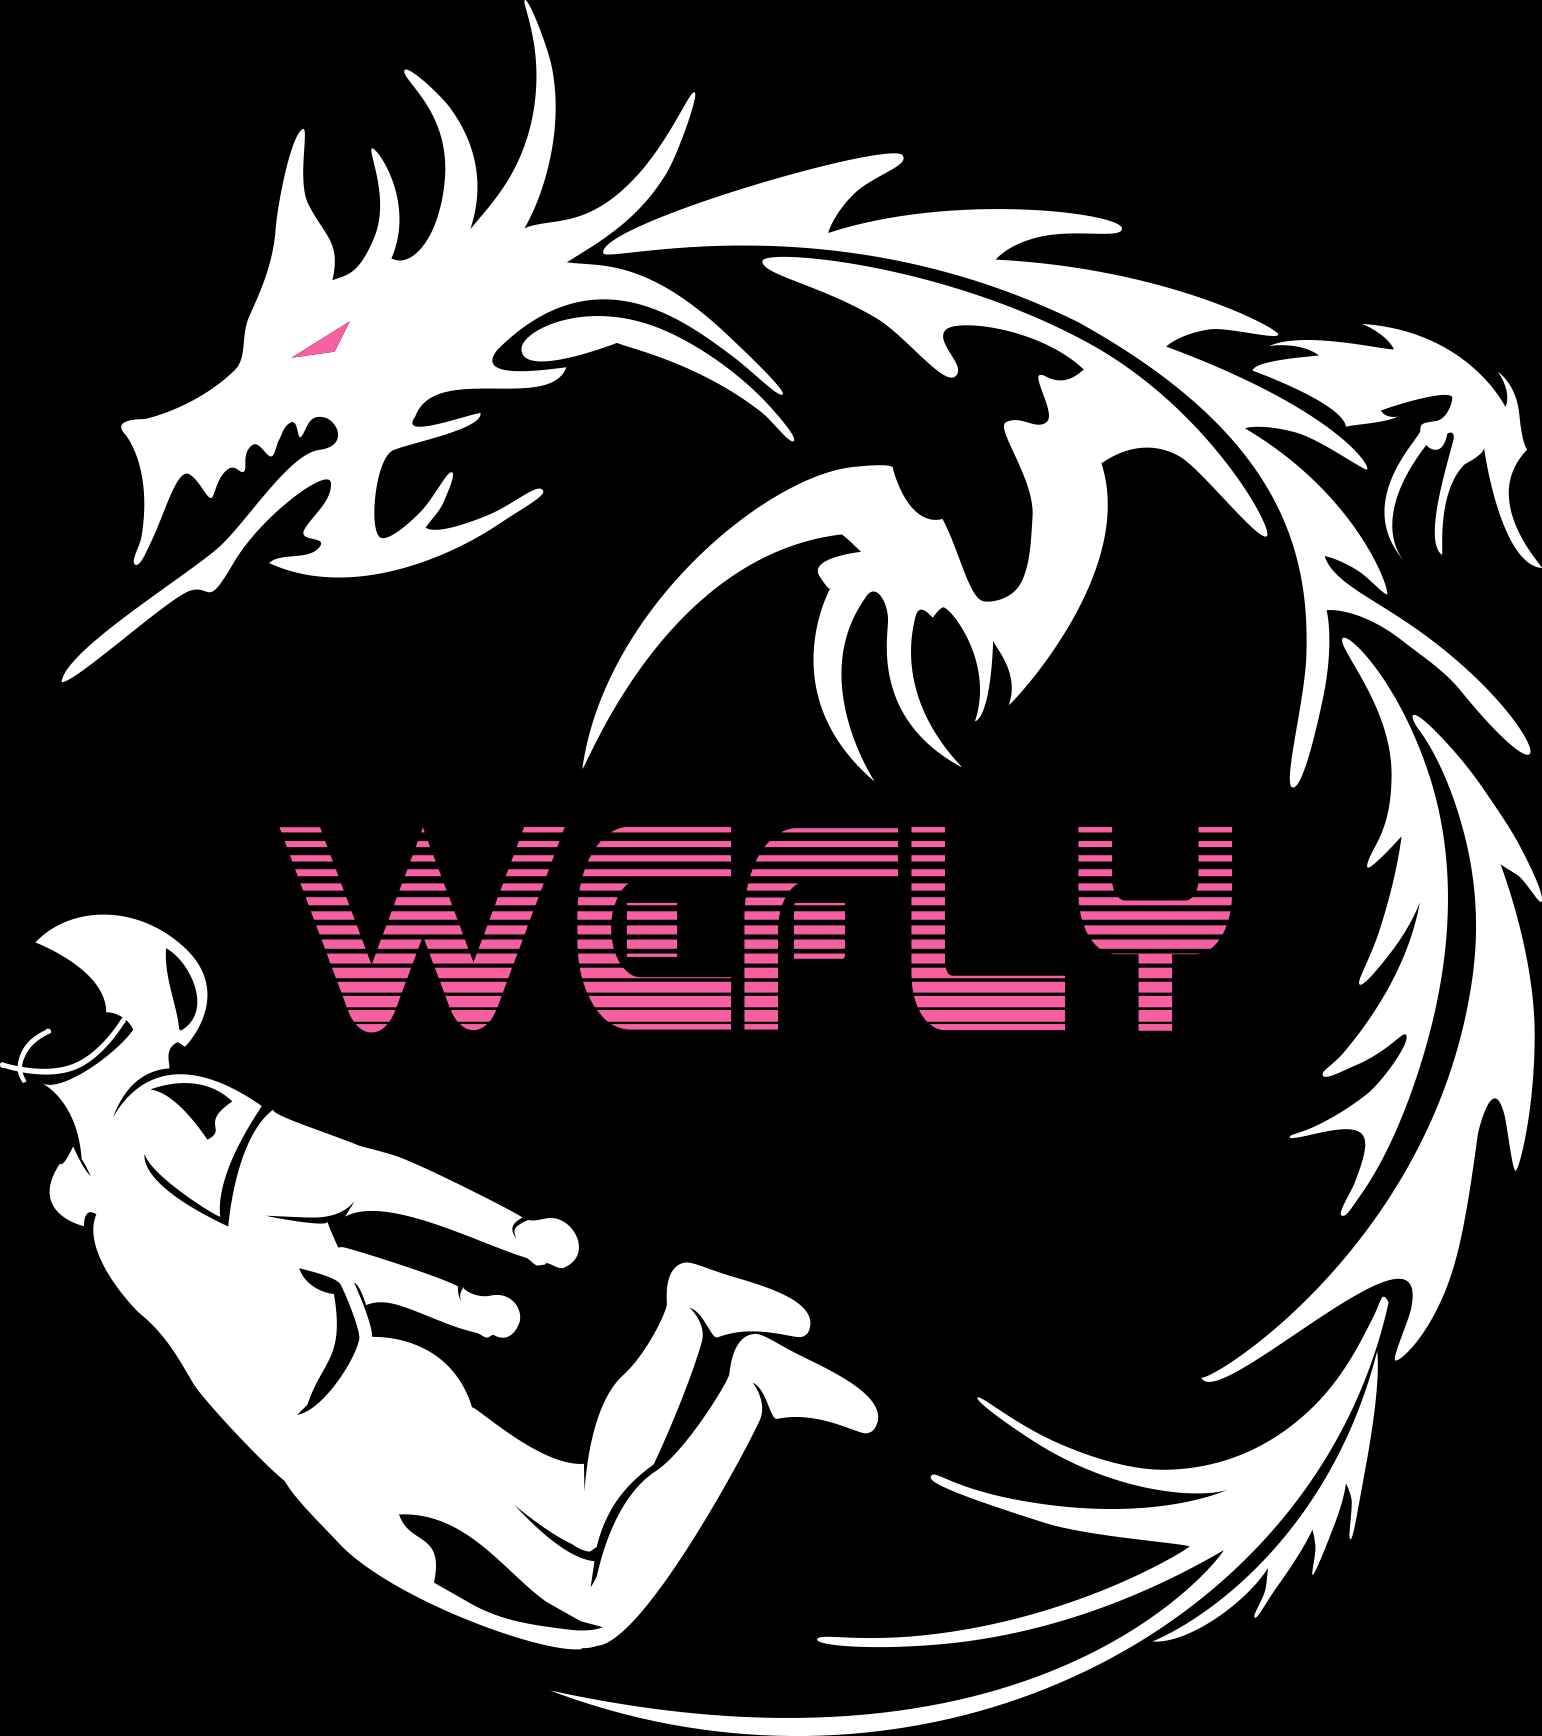 WeFly Hainan logo